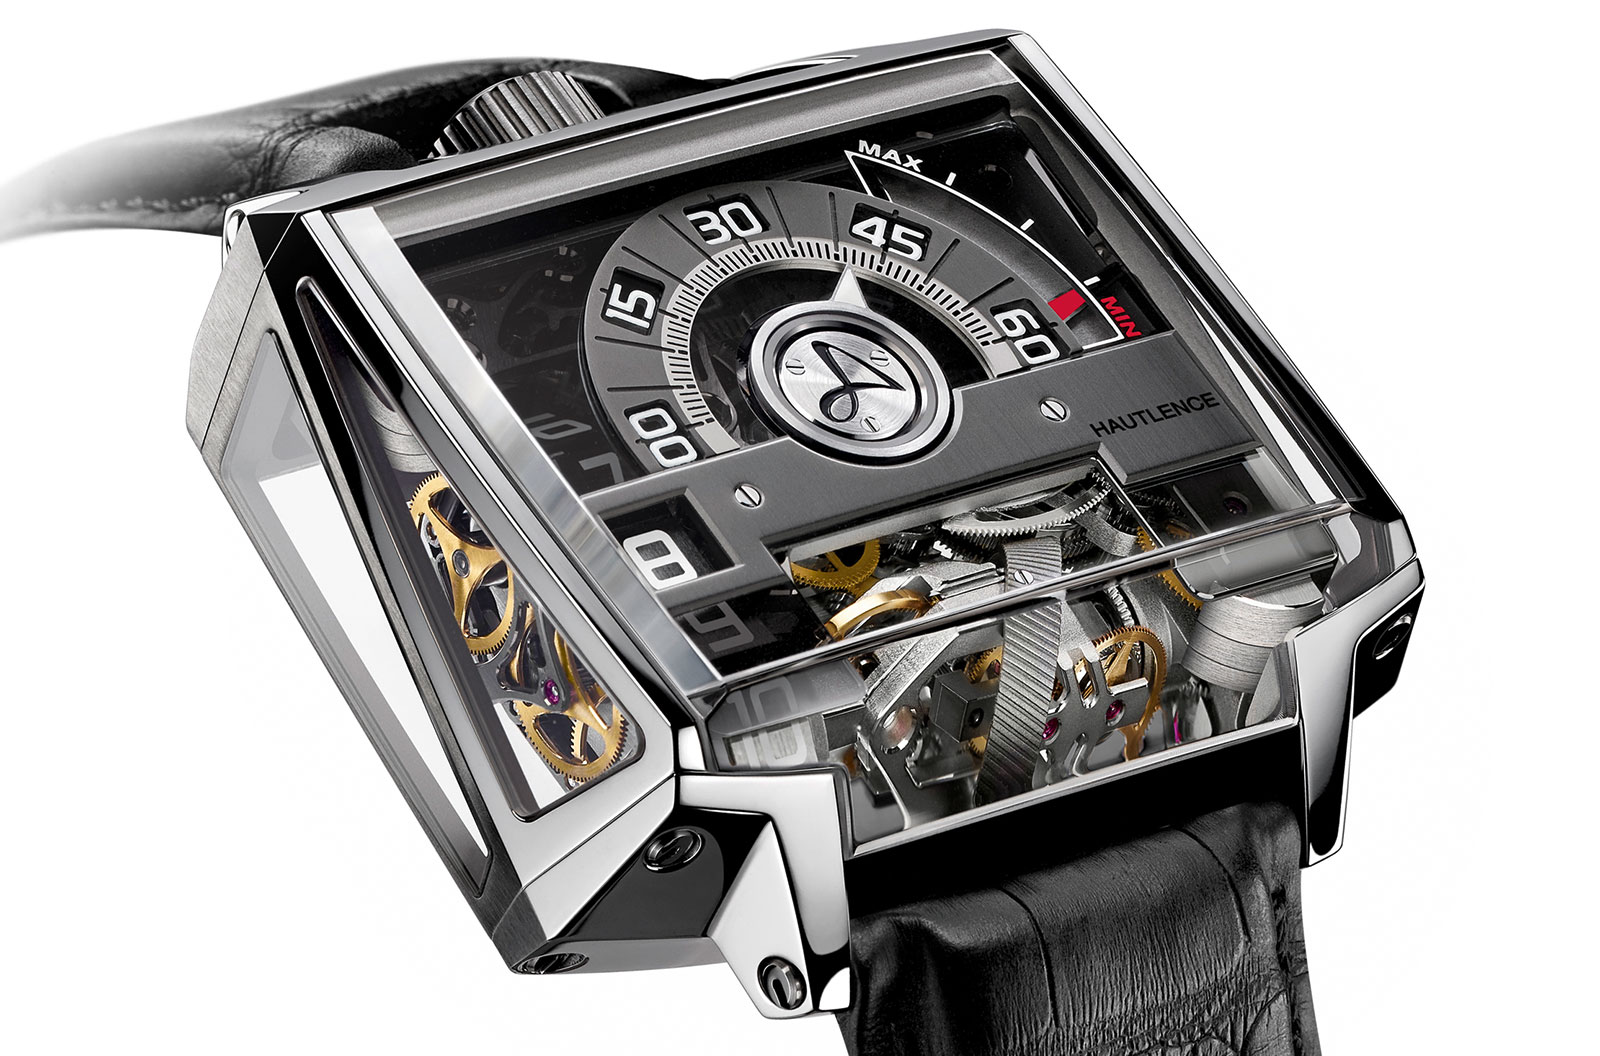 Side of Hautlence Vortex titanium limited edition watch 02